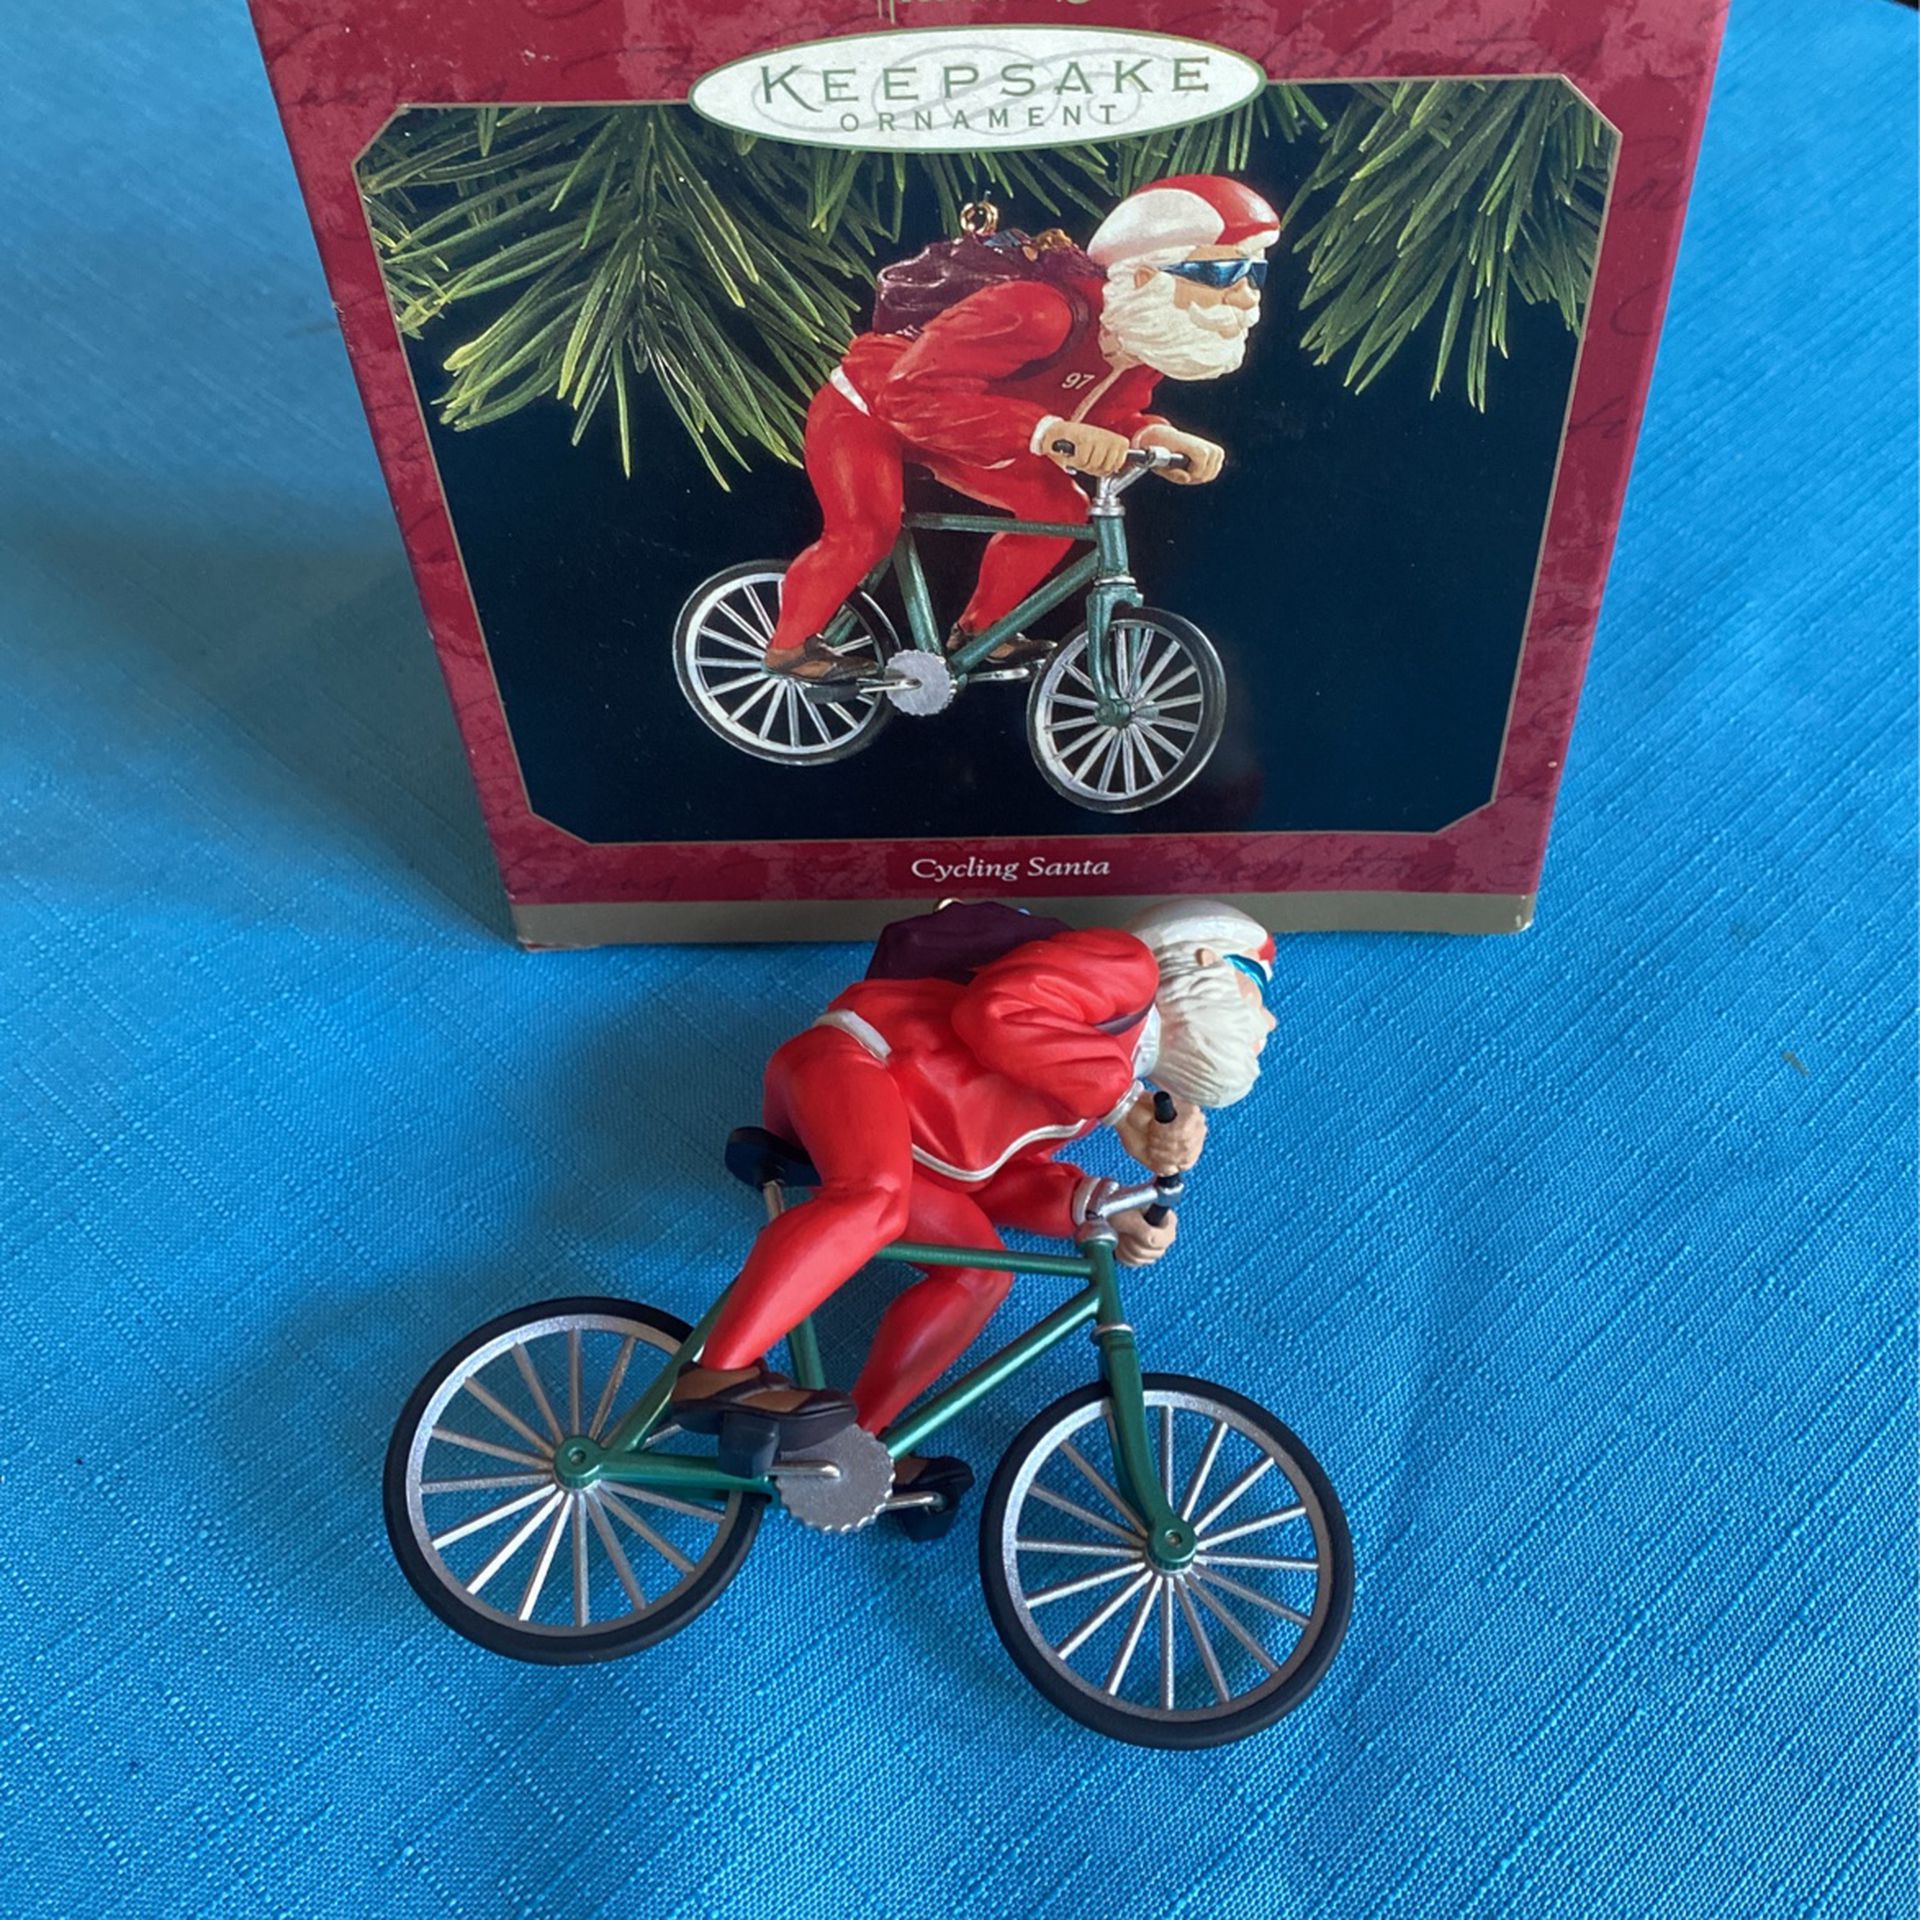 Hallmark keepsake ornament cycling Santa handcrafted dated 1997 in the original box